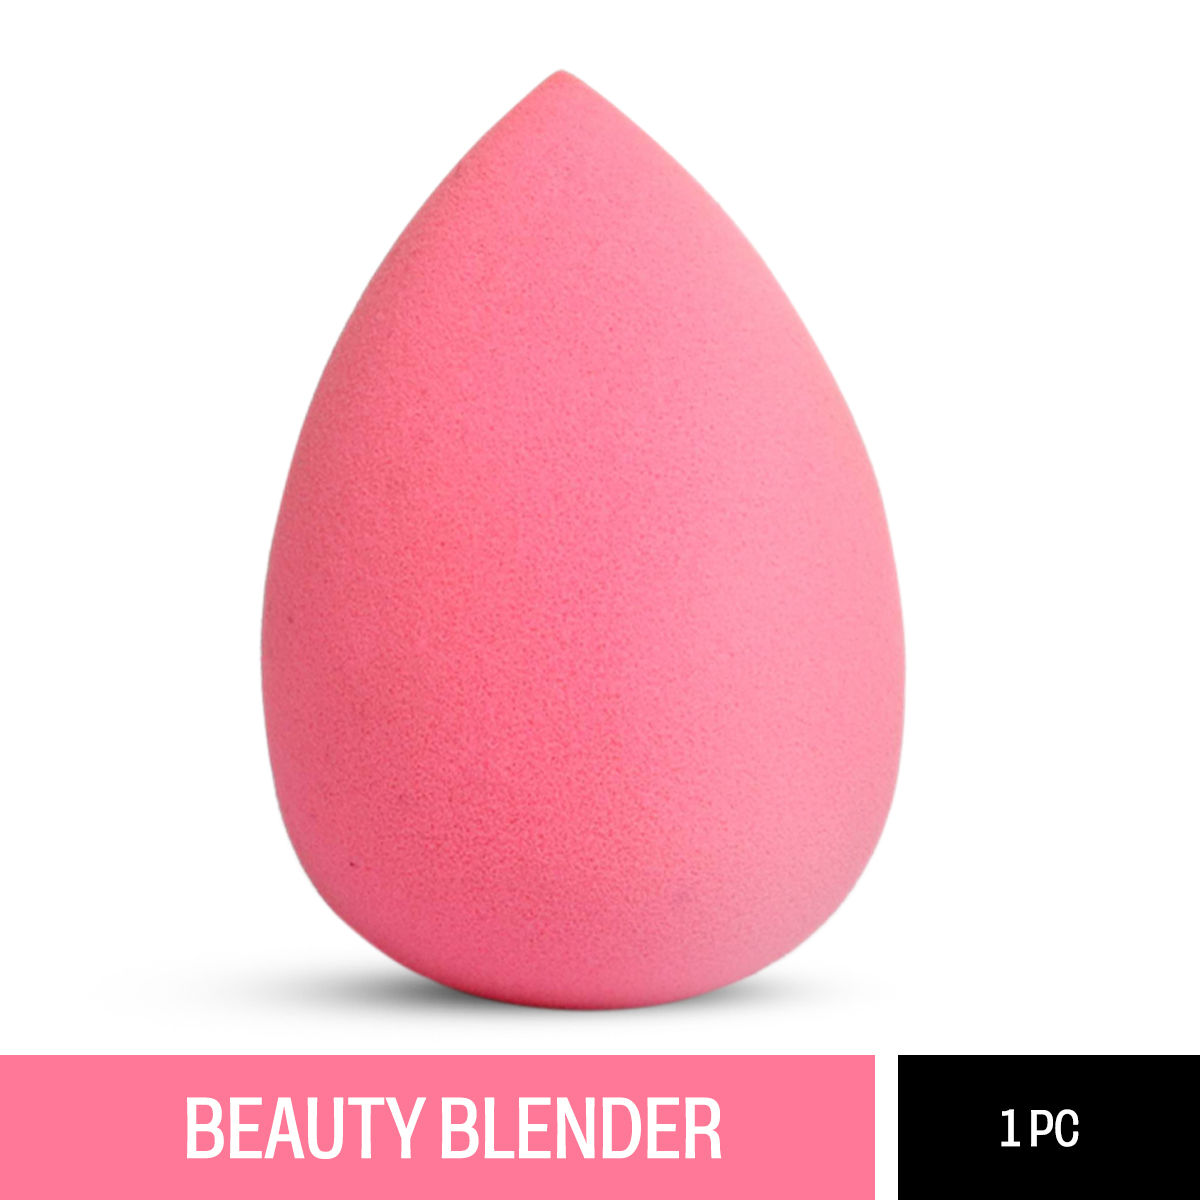 Insight Cosmetics Beauty Blender Sponge Applicator - Pink